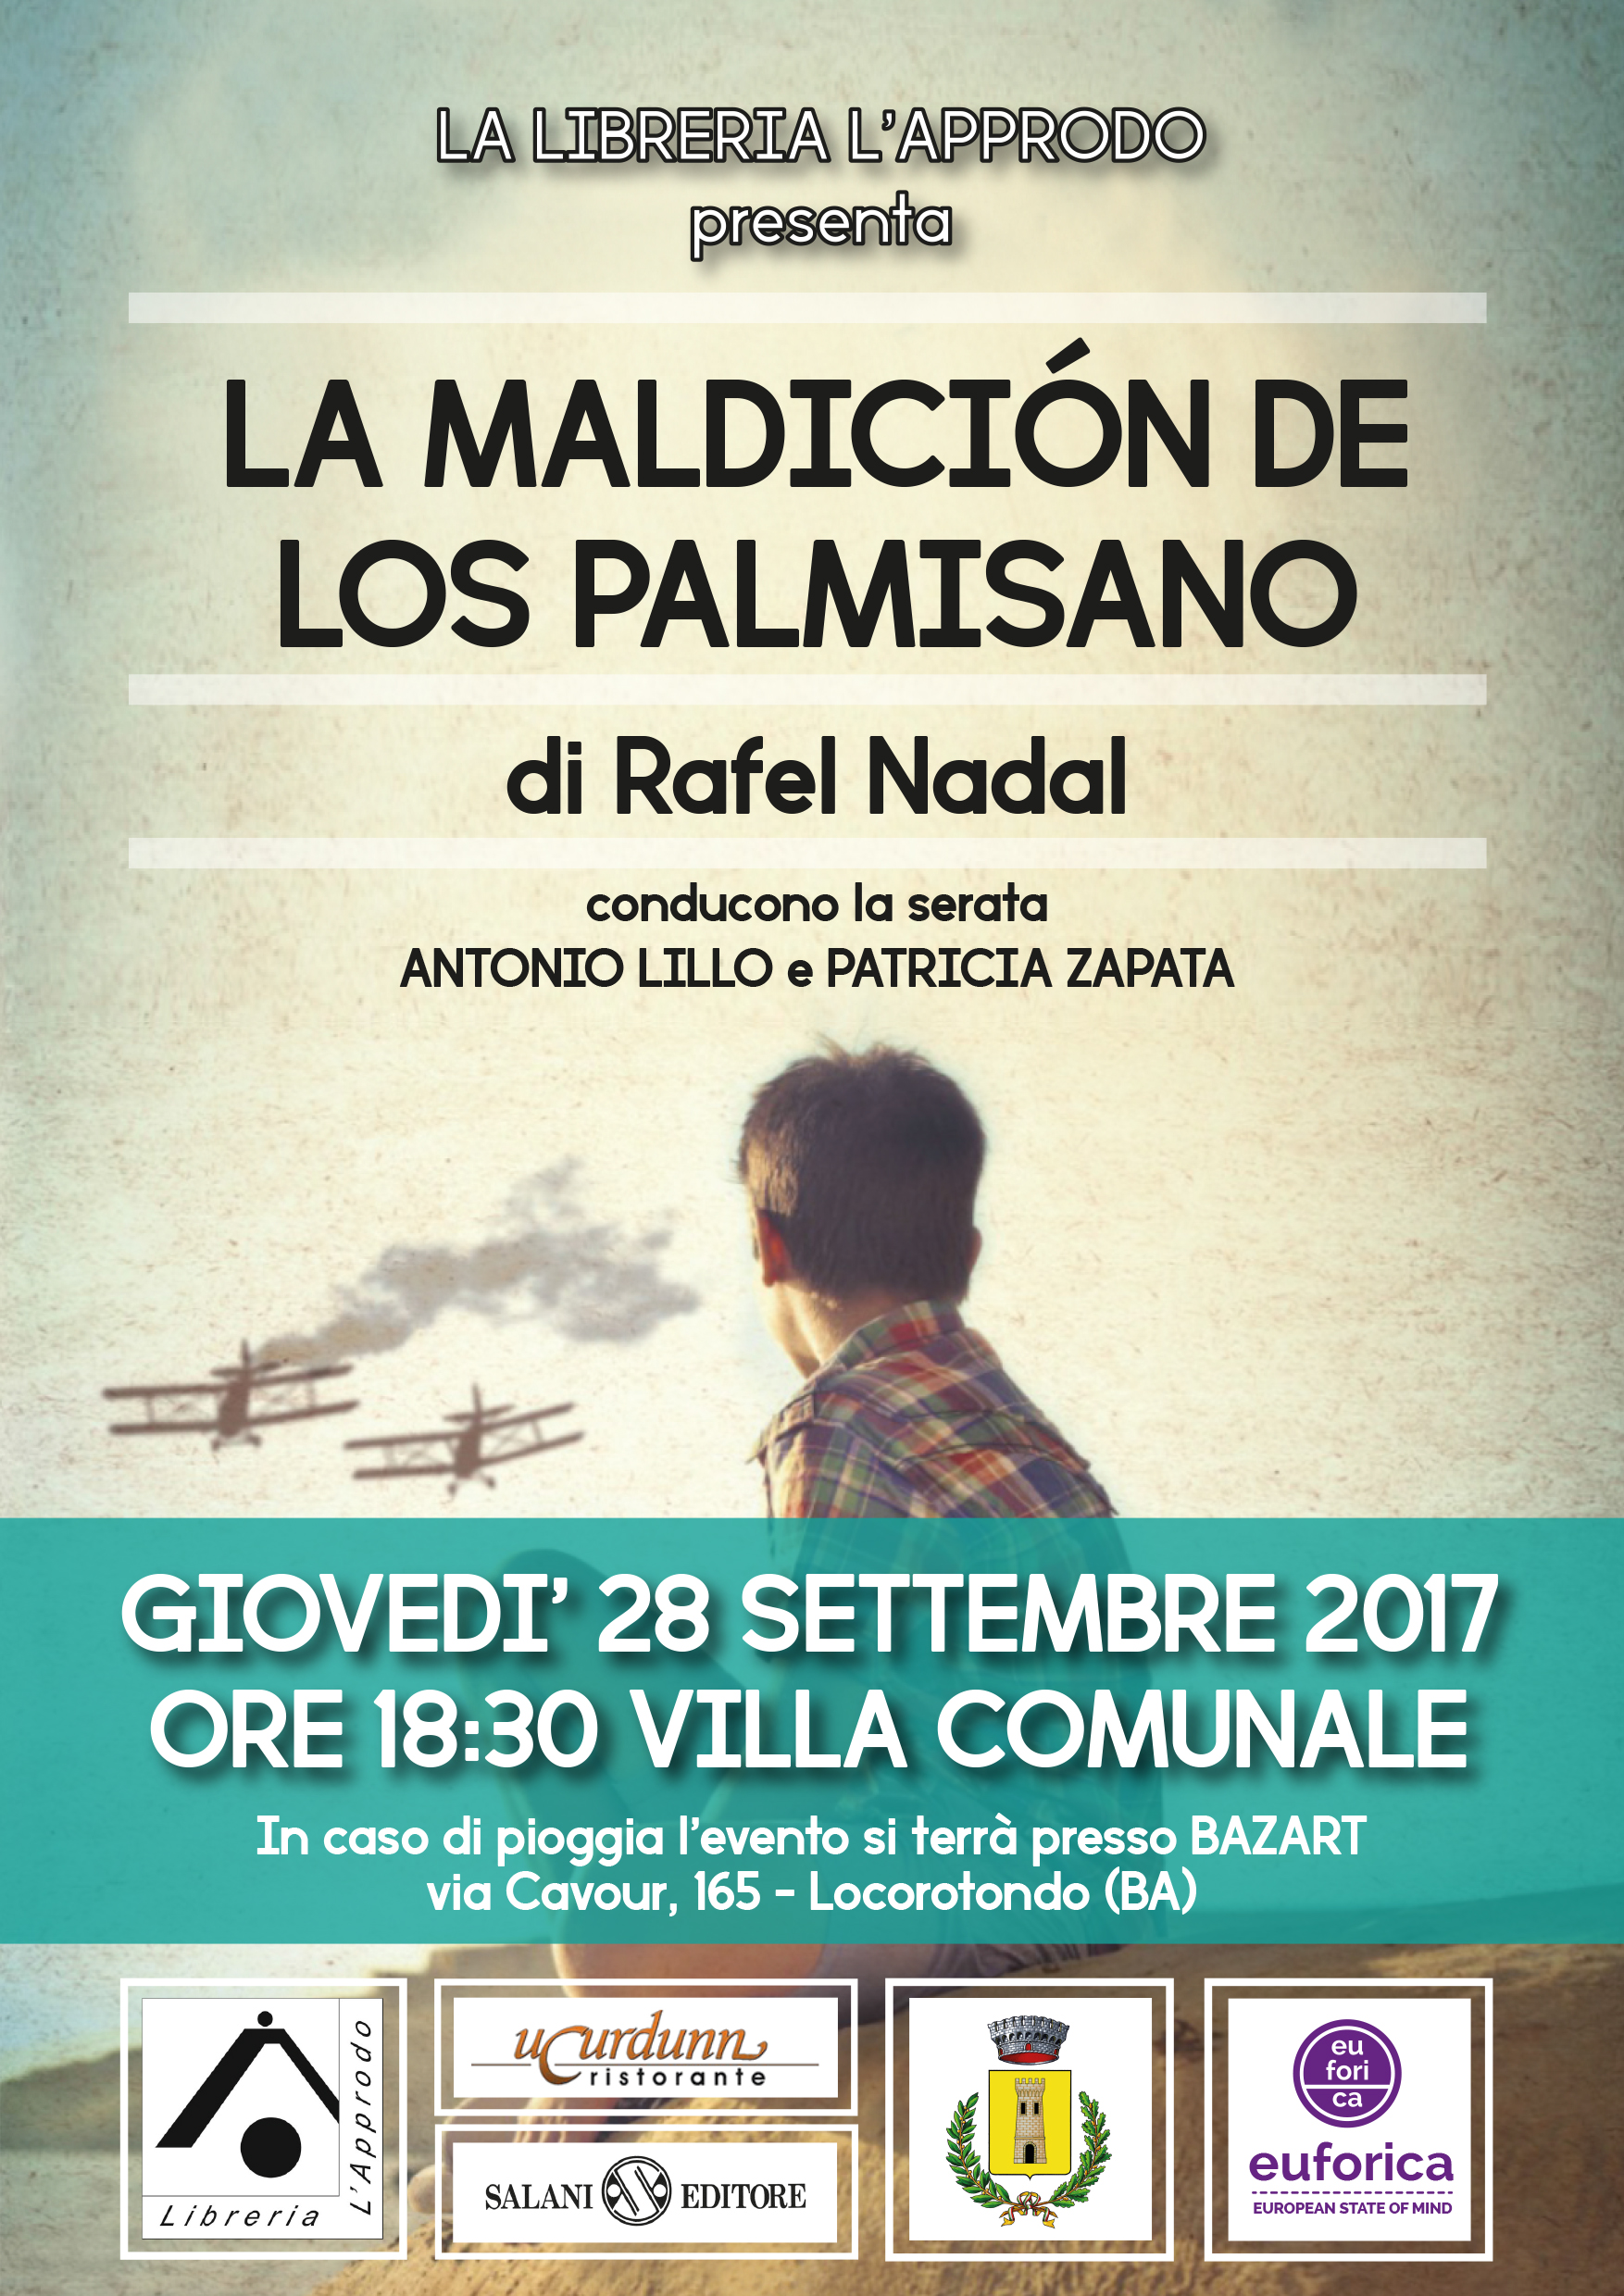 Locorotondo: Rafael Nadal presenta “La maeldicion de los Palmisano”